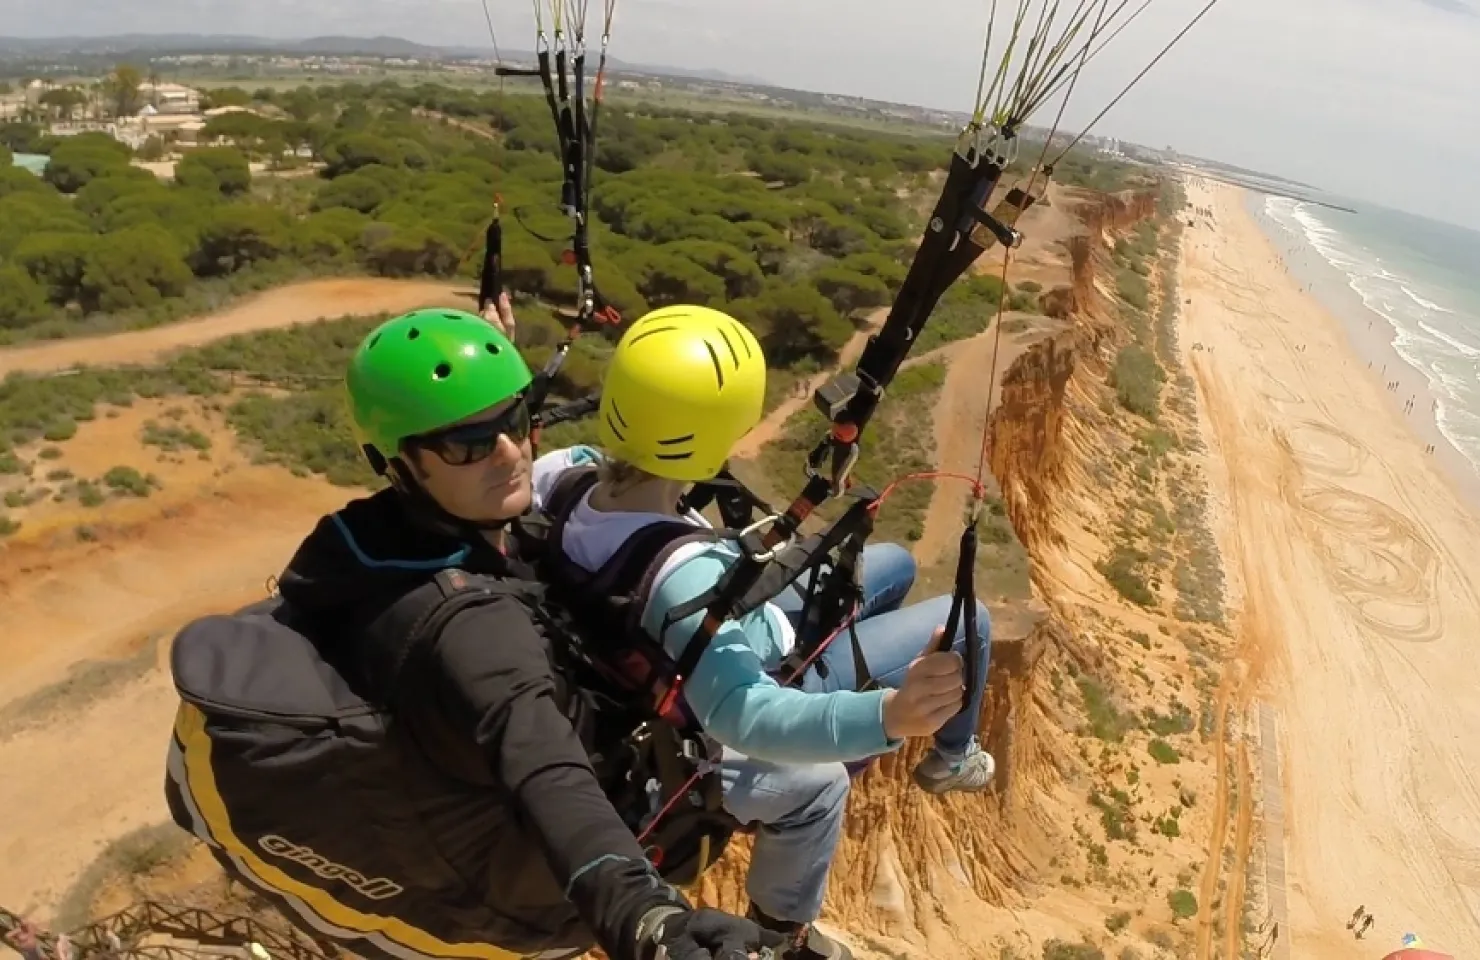 Paragliding experience in Vilamoura - Vilamoura things to do